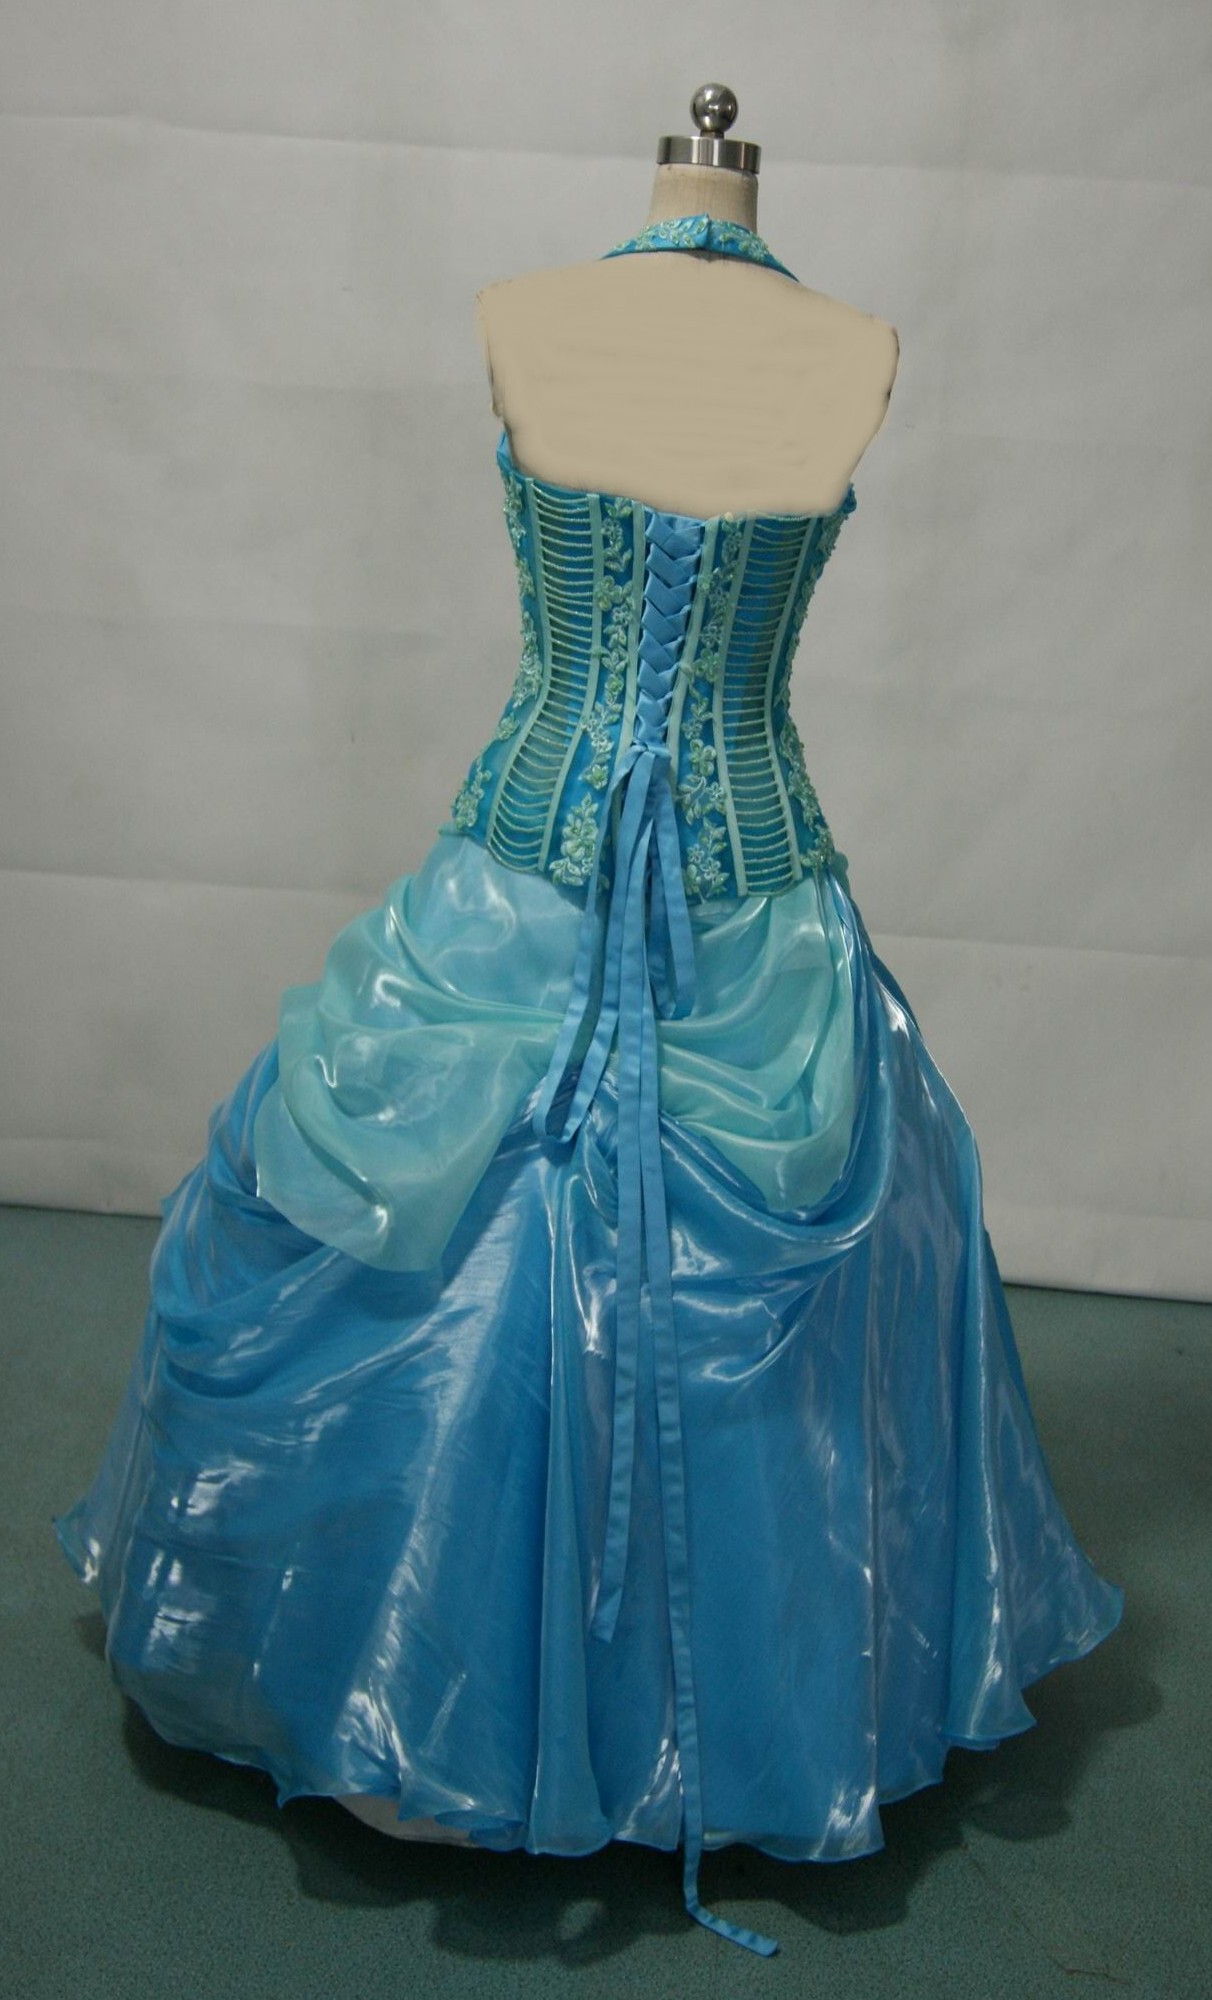 Sky blue blended skirt and corset